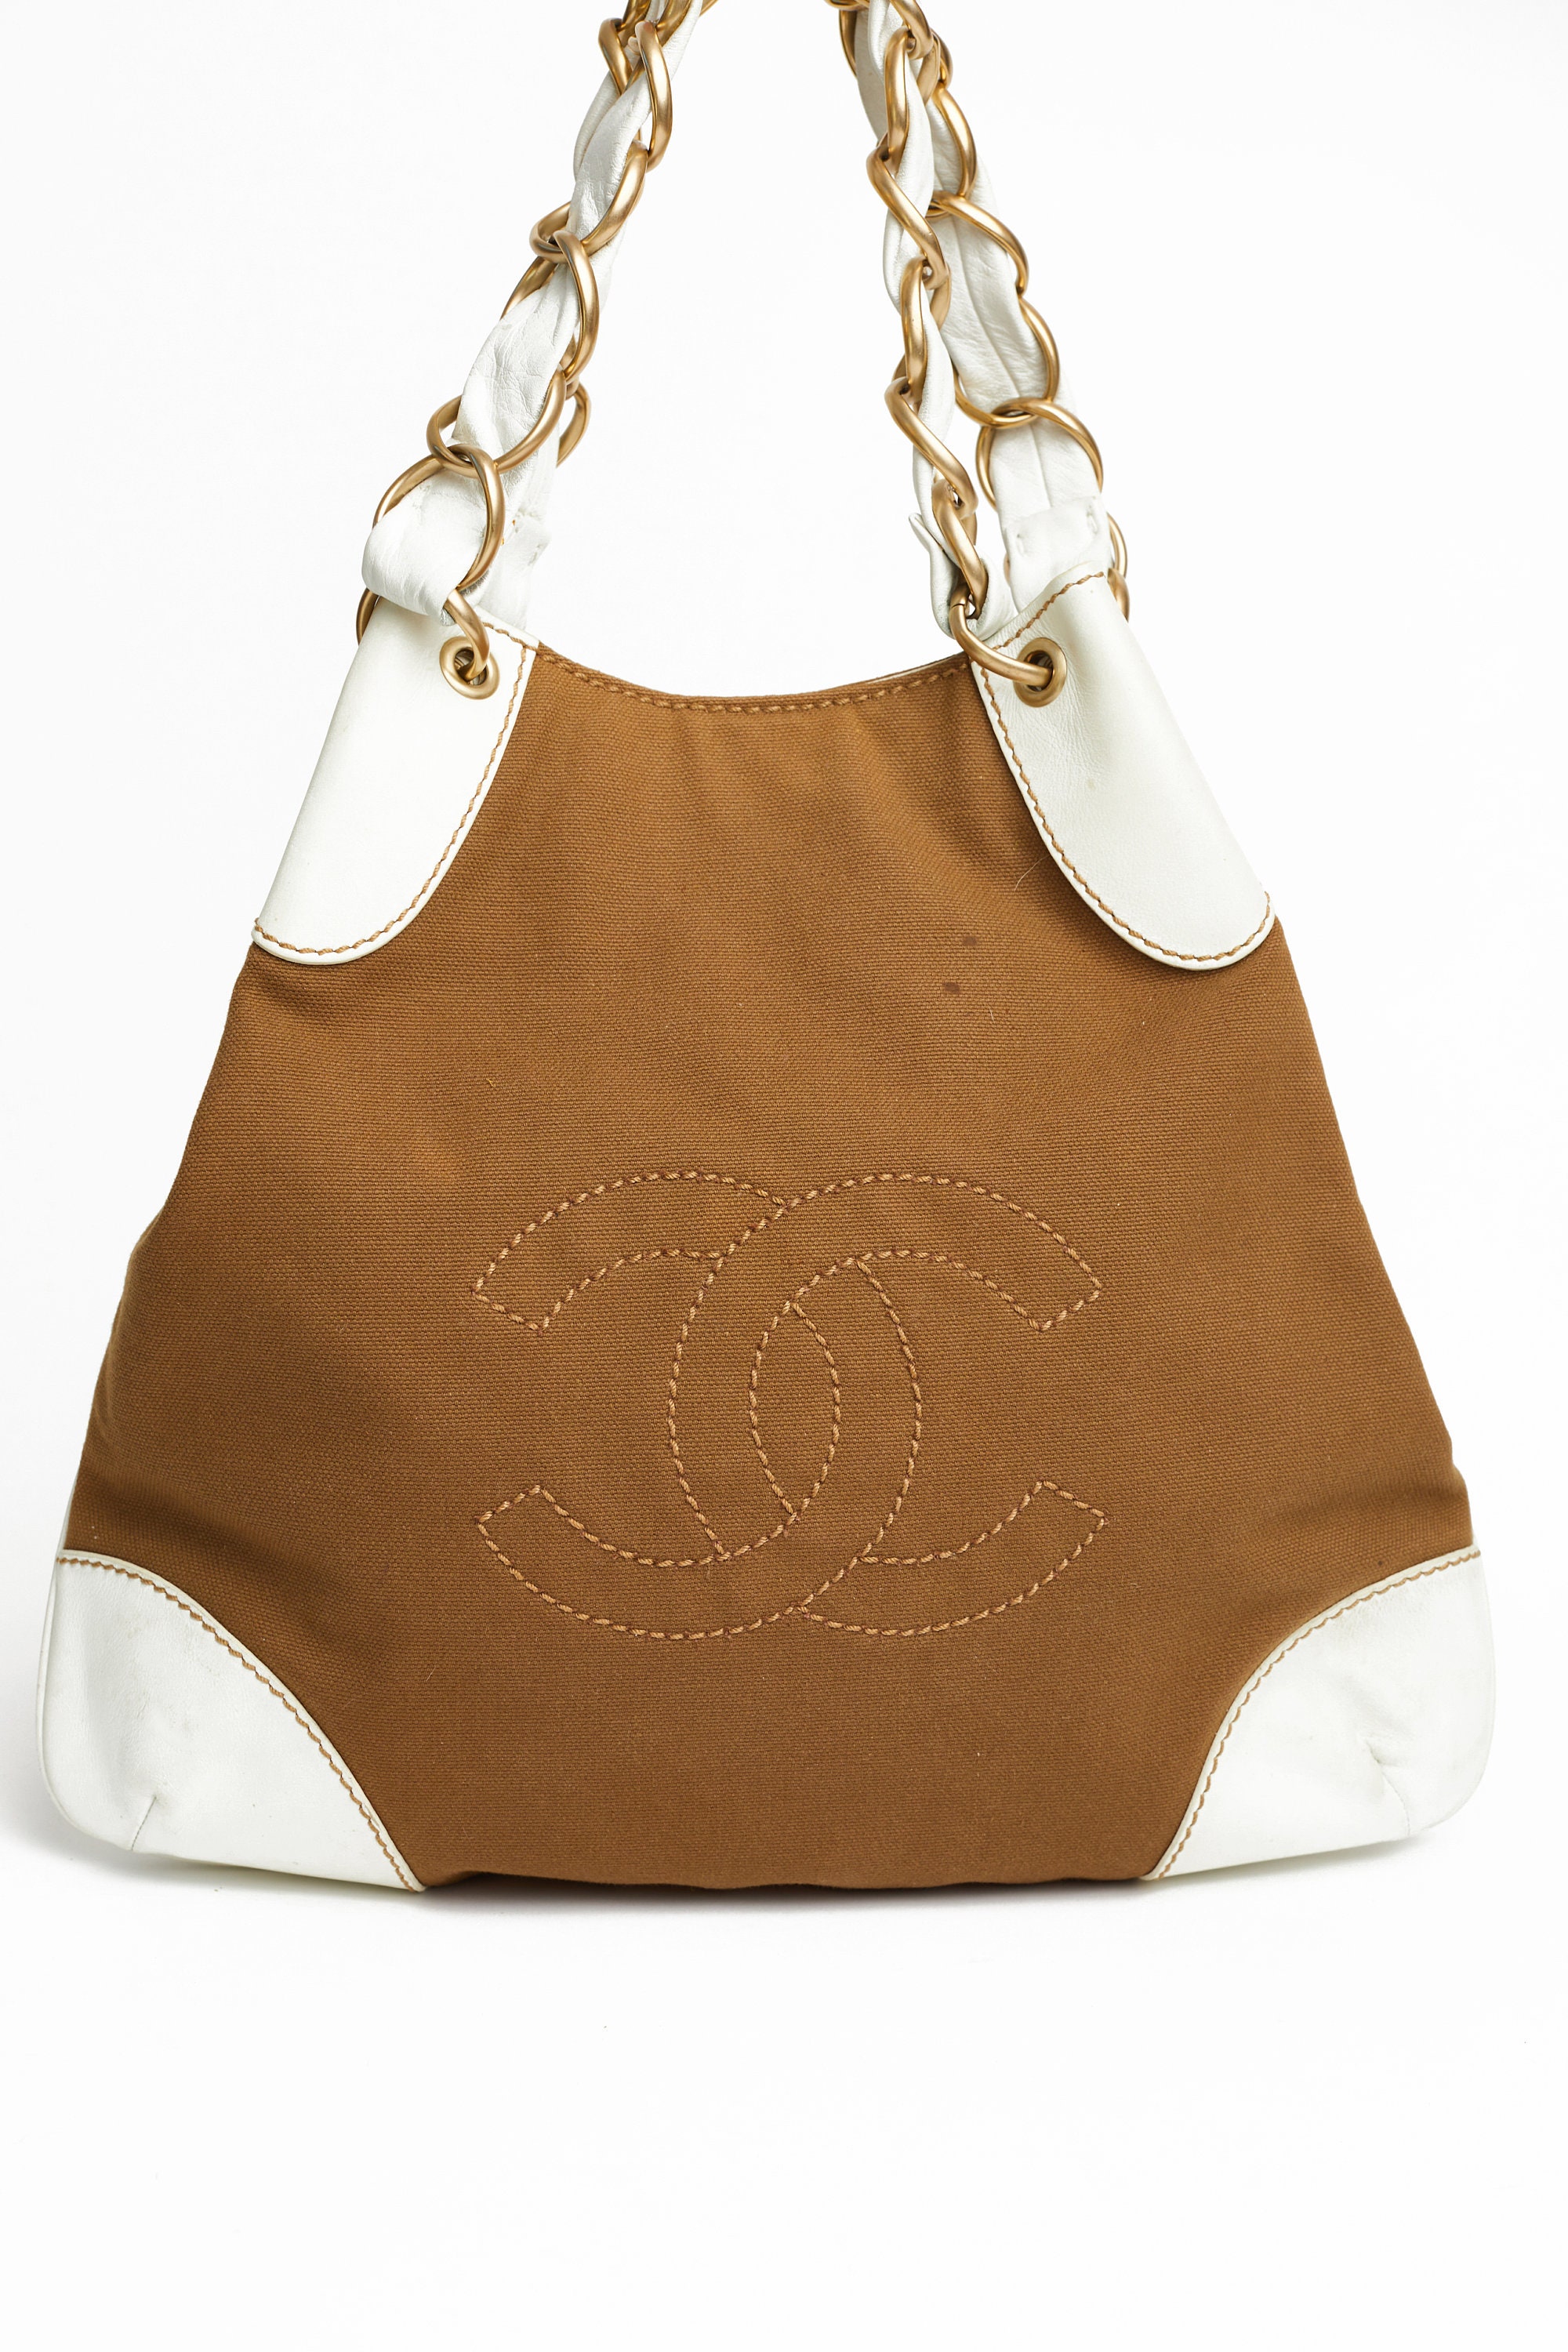 Chanel Vintage Mary Kate Olsen Bag